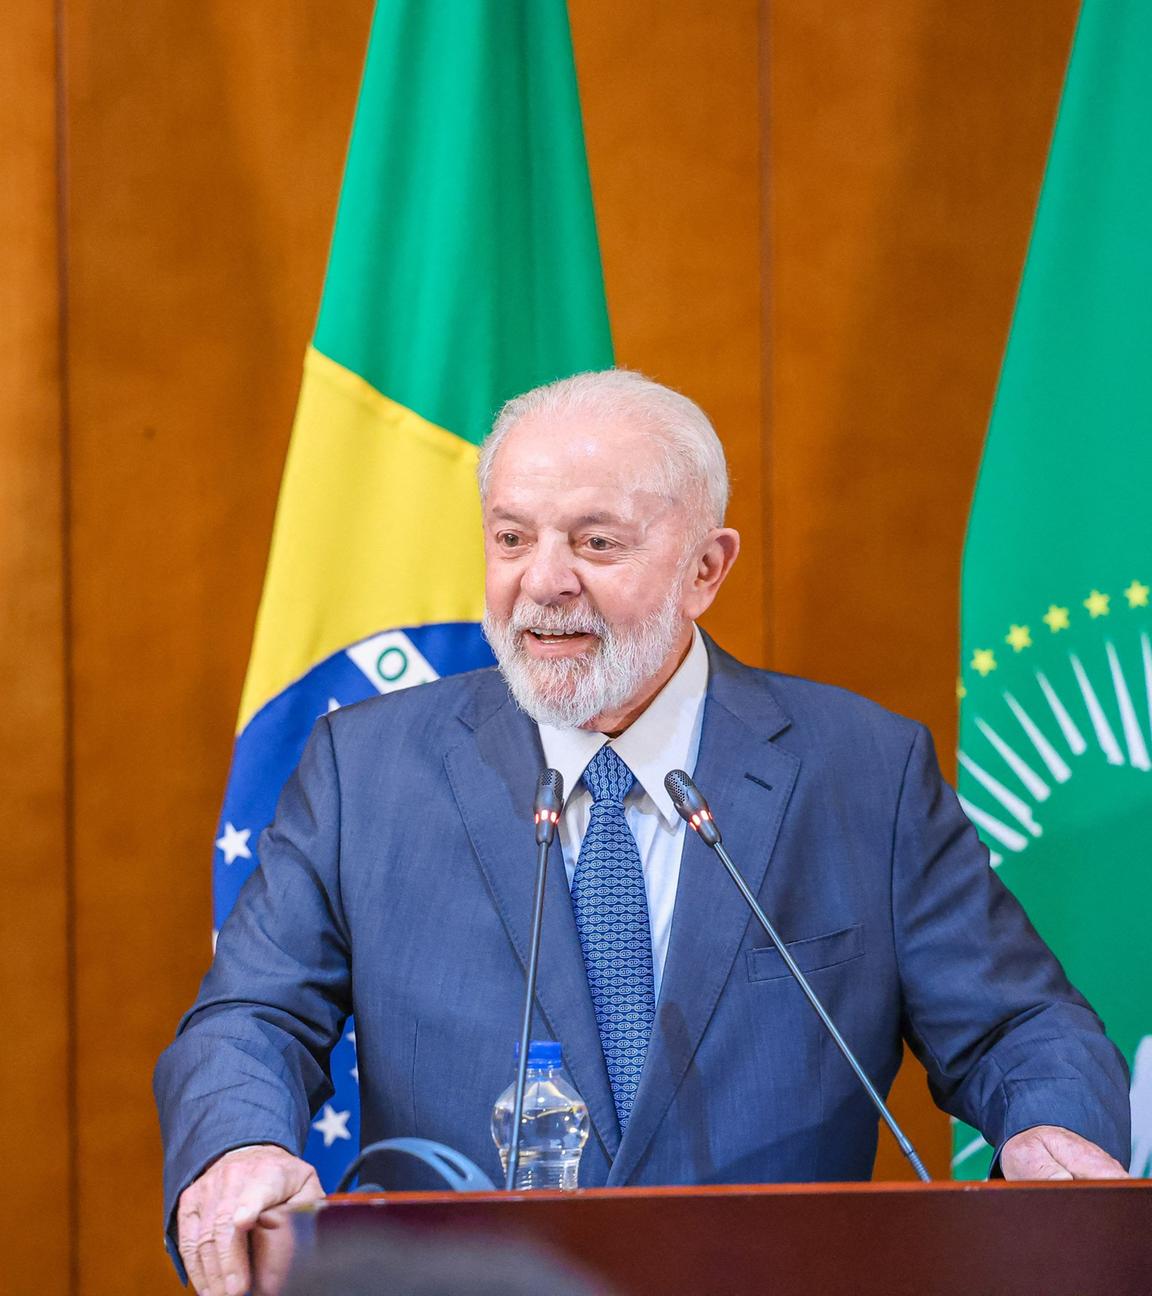 Brassiliens Präsident Lula da Silva